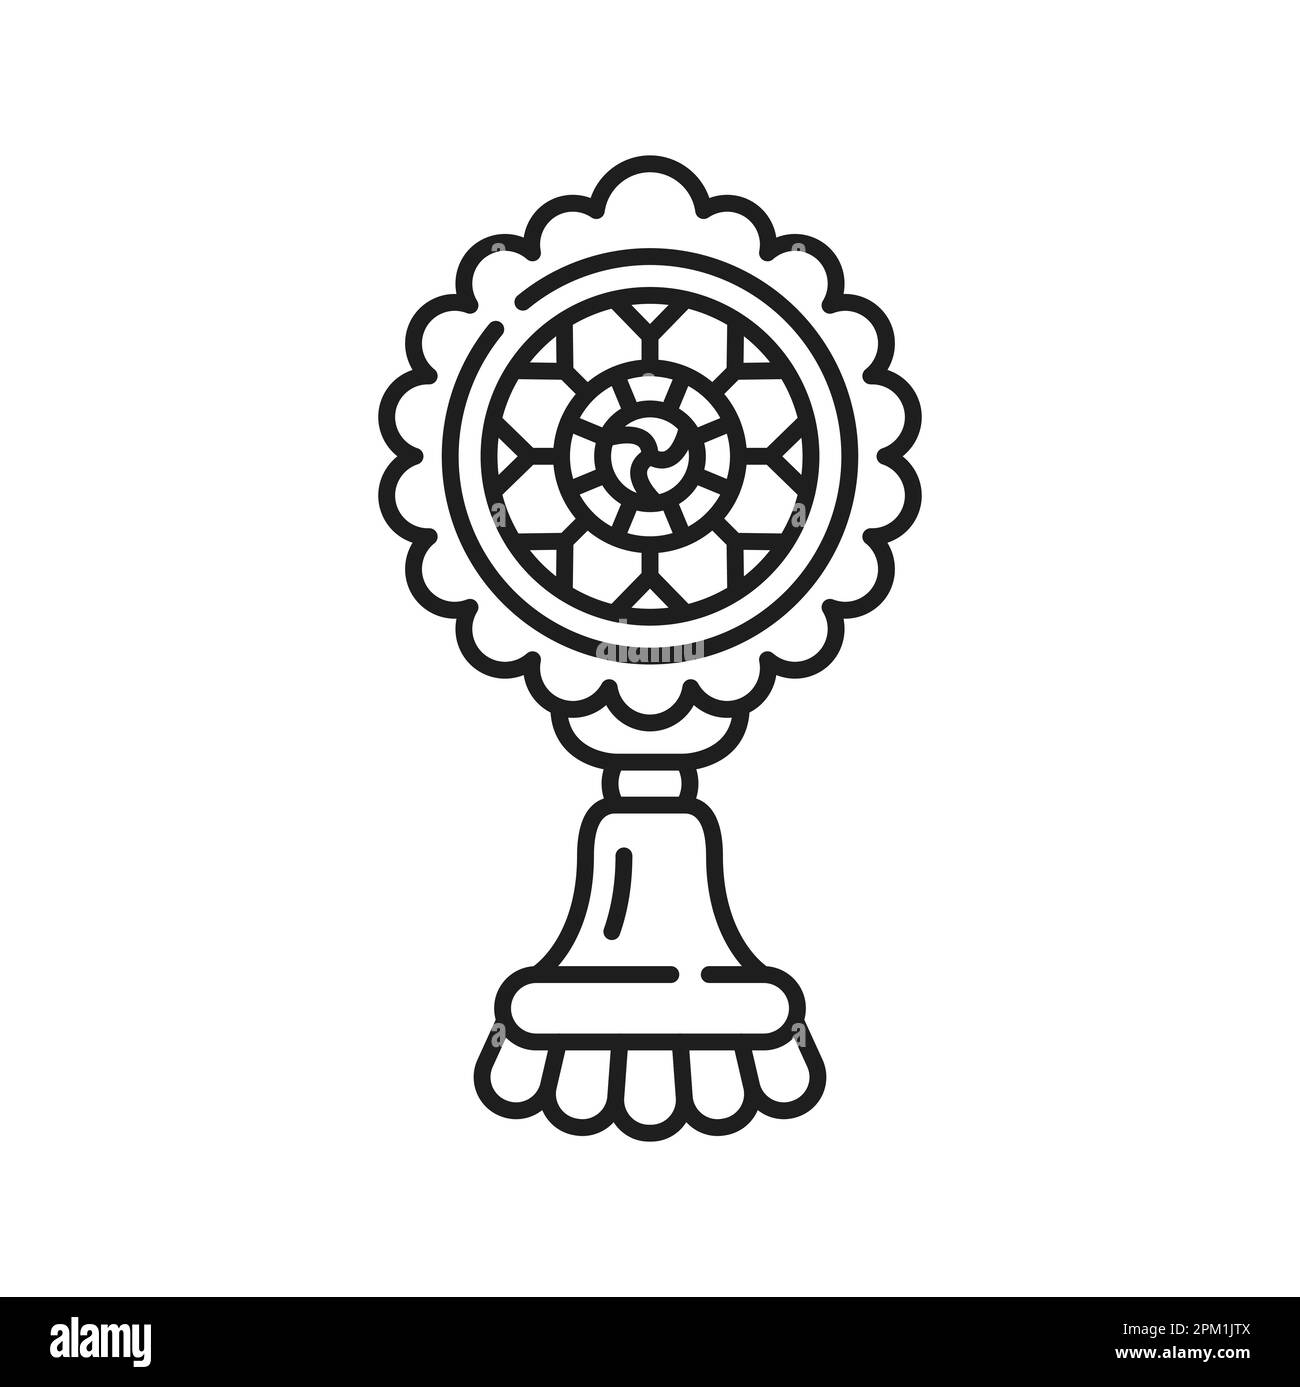 Buddhism religion symbol of Dharmachakra or Dharma wheel, Buddhist vector icon. Buddhism, Hinduism, Jainism and Tibetan Buddhist religious symbol of D Stock Vector